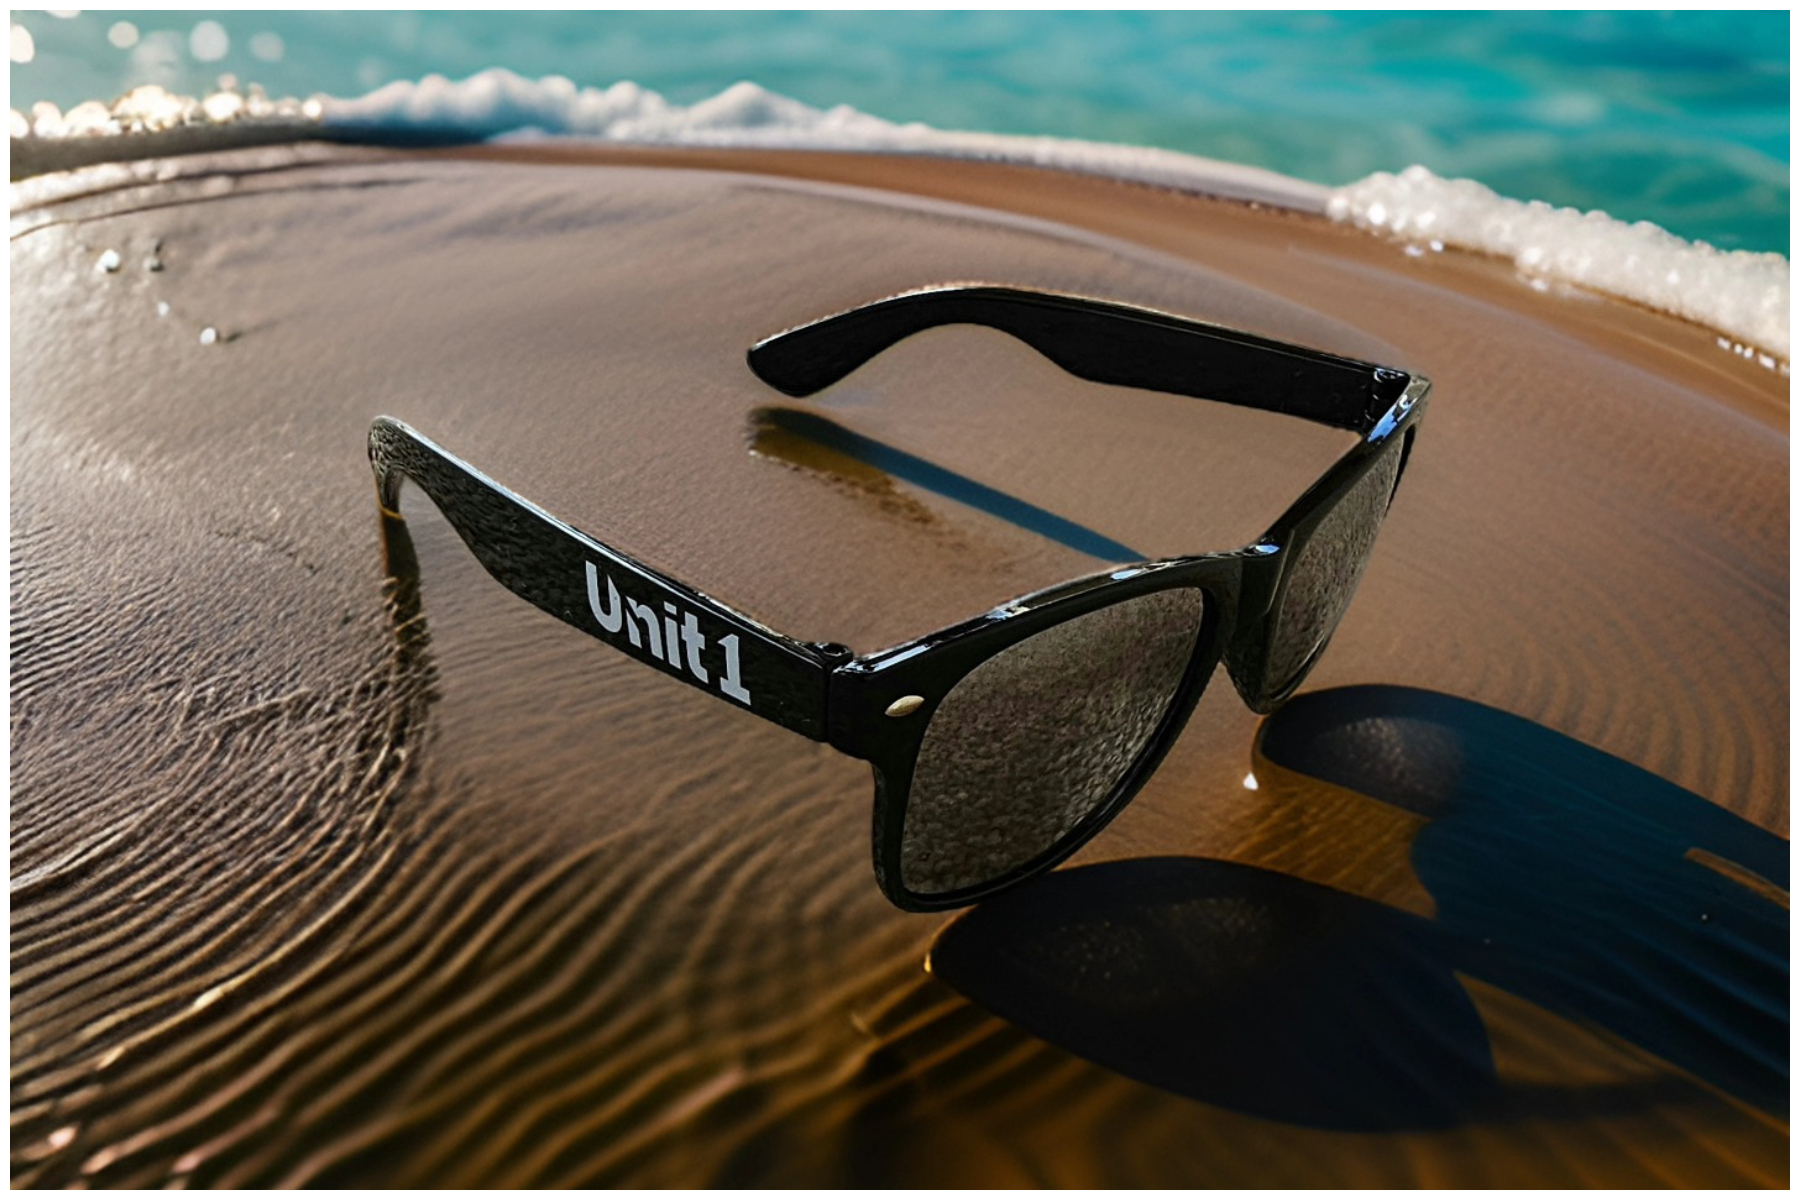 Sunglasses on sand at a beach